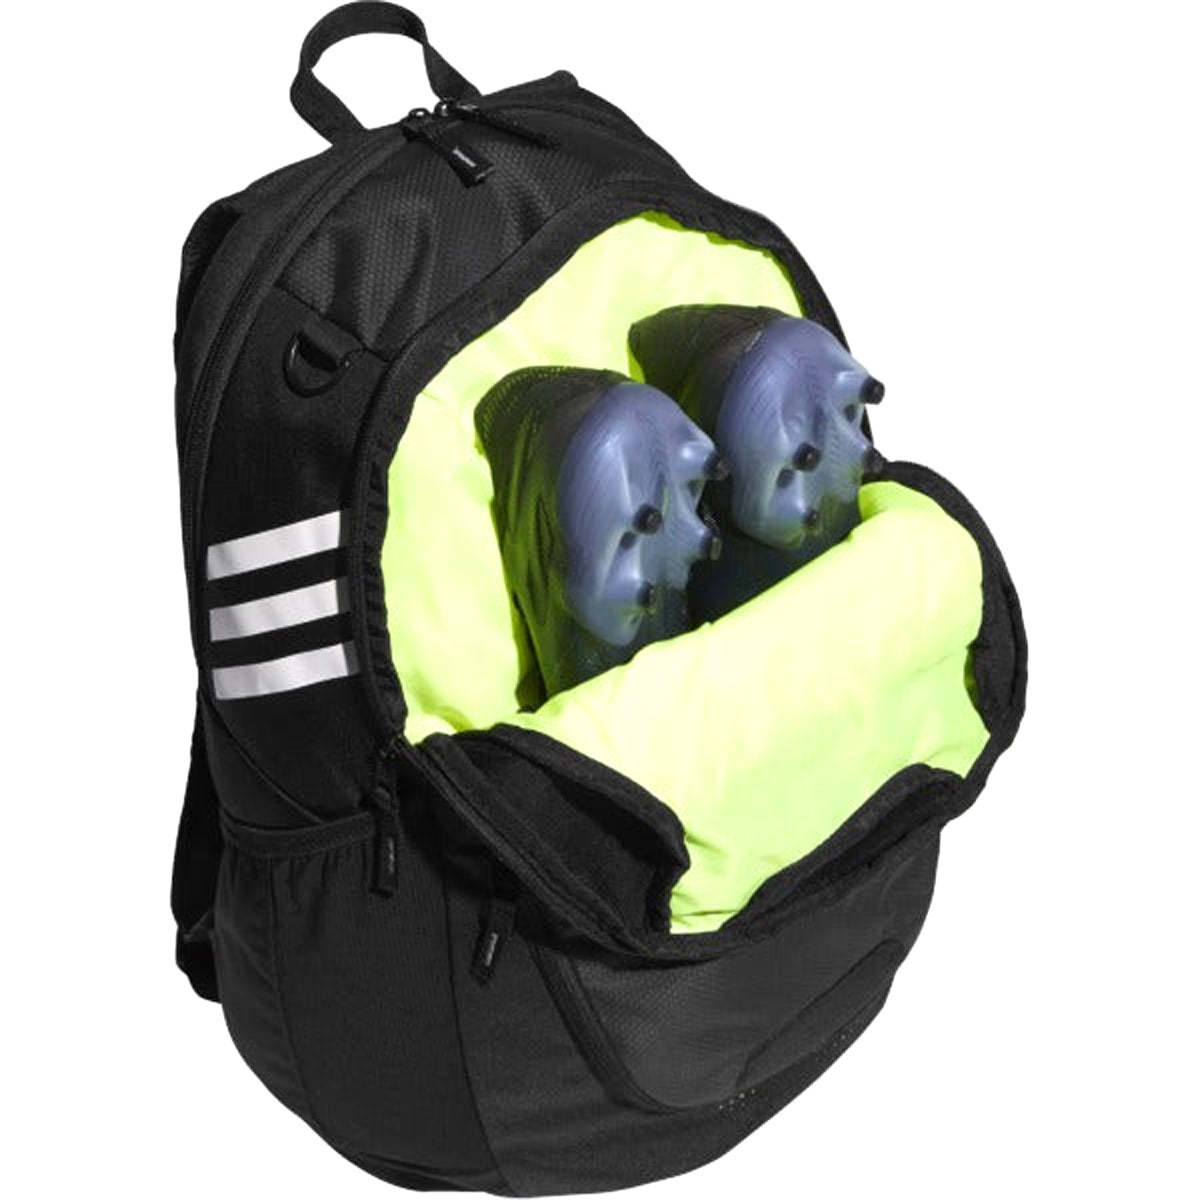 DASC Stadium III Backpack Bags Adidas 